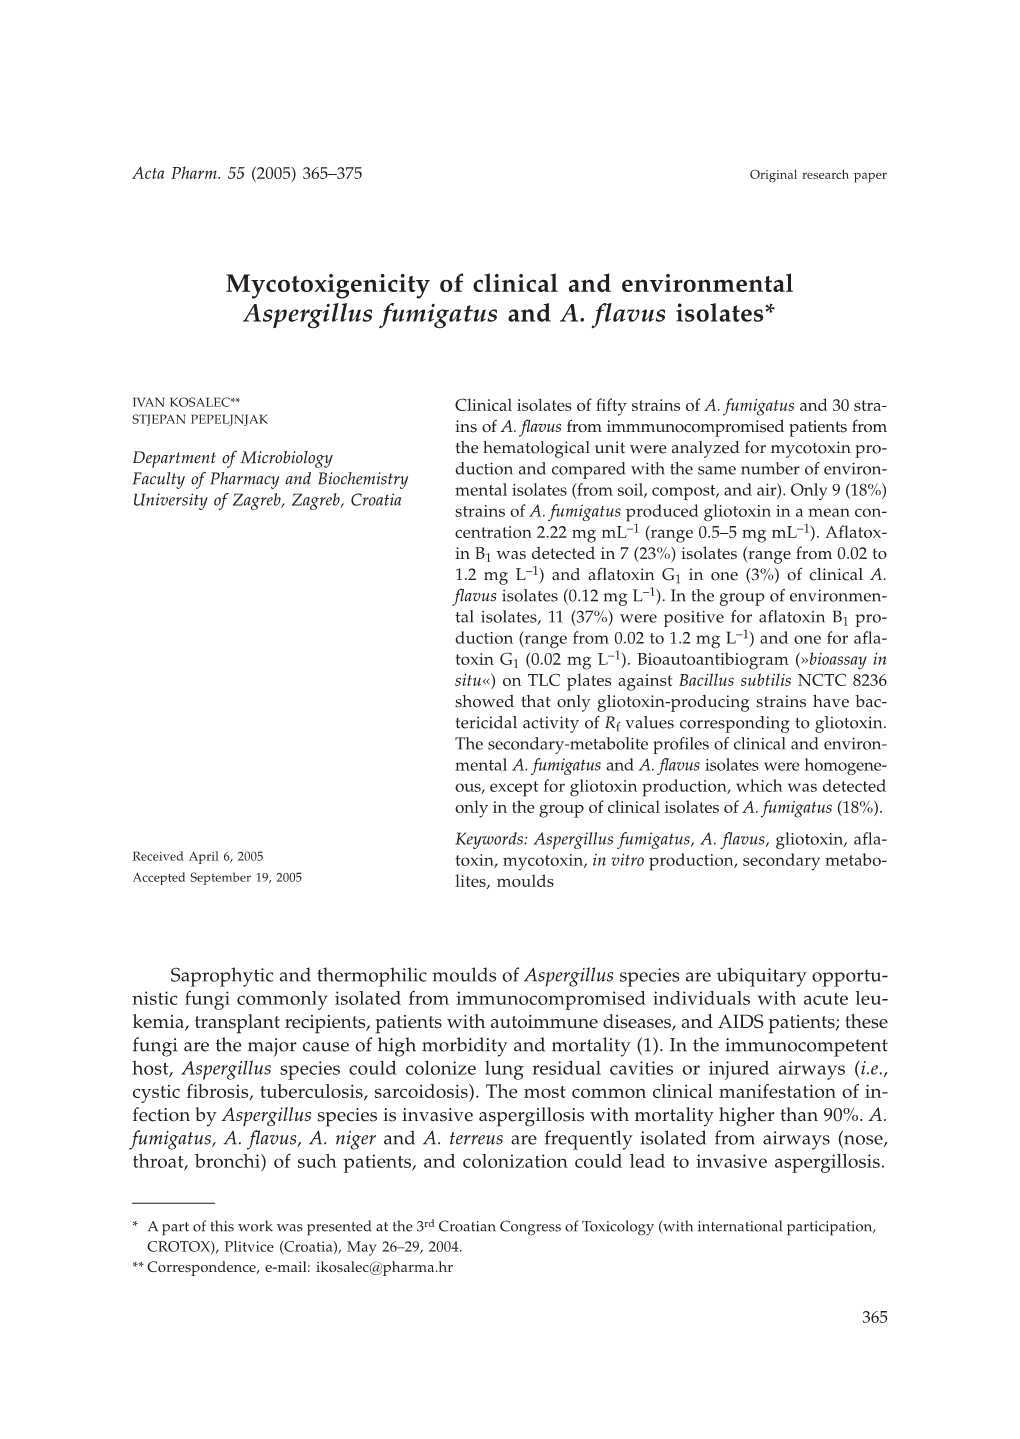 Mycotoxigenicity of Clinical and Environmental Aspergillus Fumigatus and A